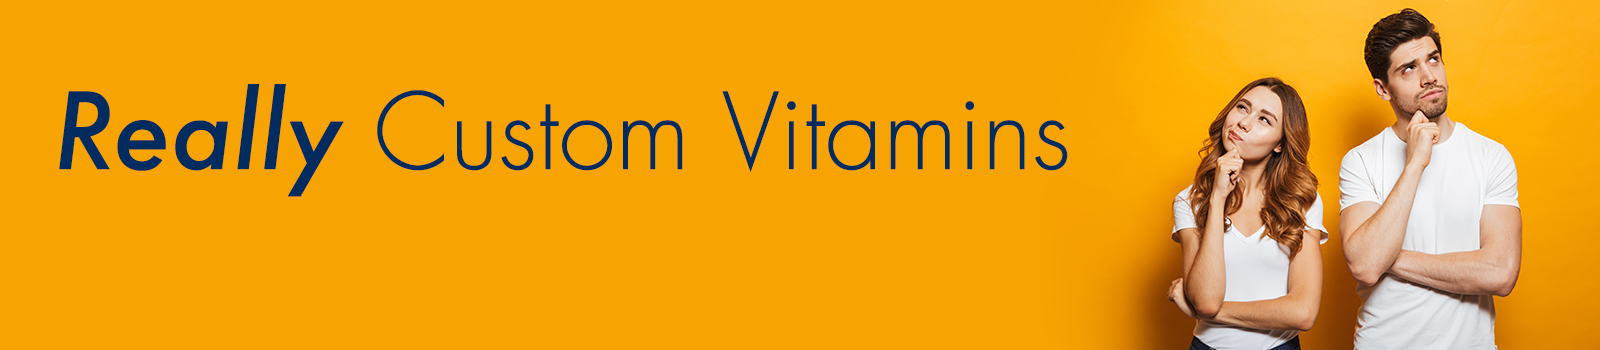 Are All Custom Vitamins Really Custom Made?